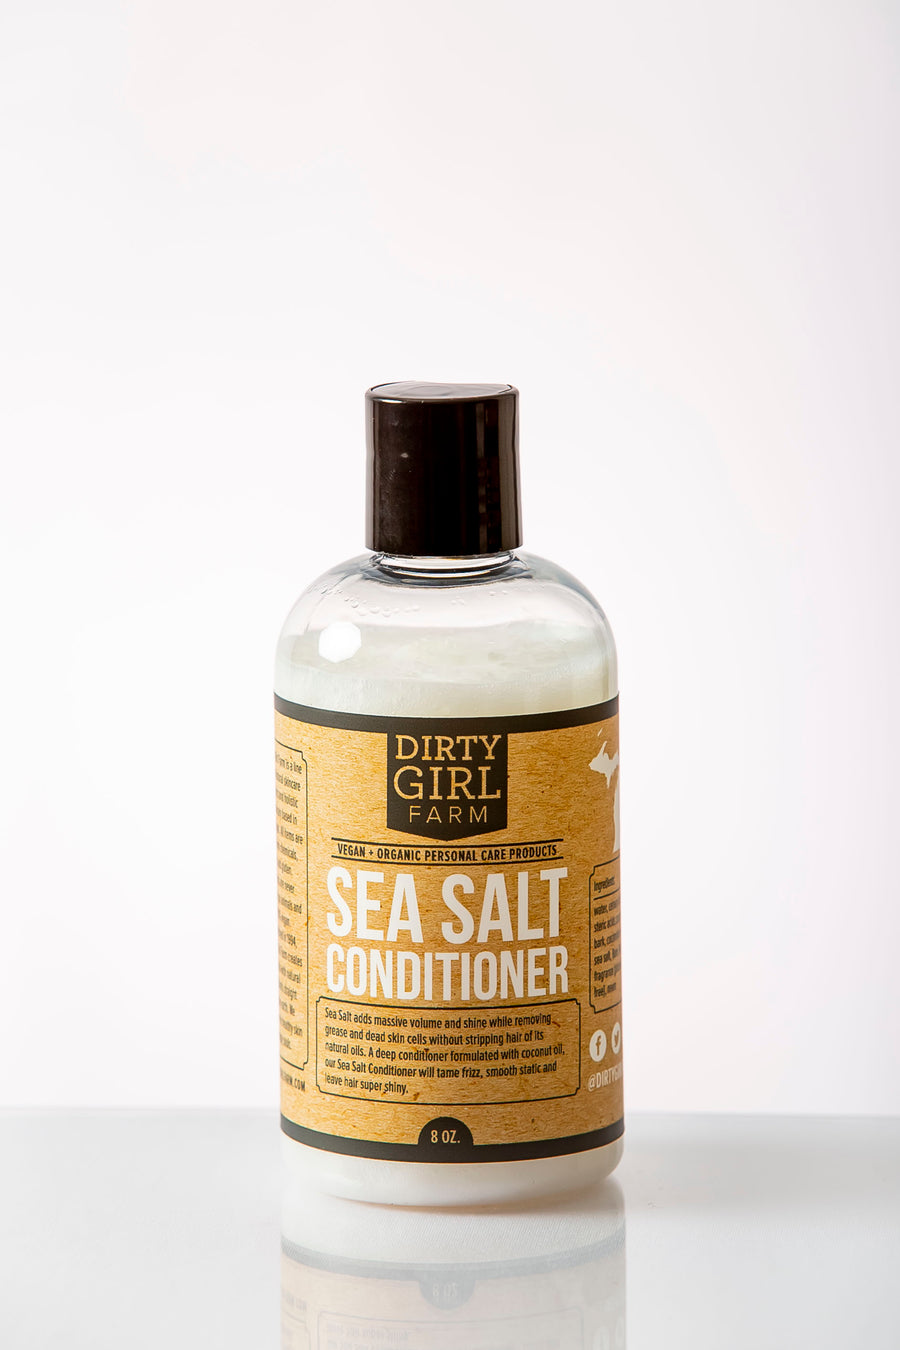 Dirty Girl Farm Sea Salt Conditioner